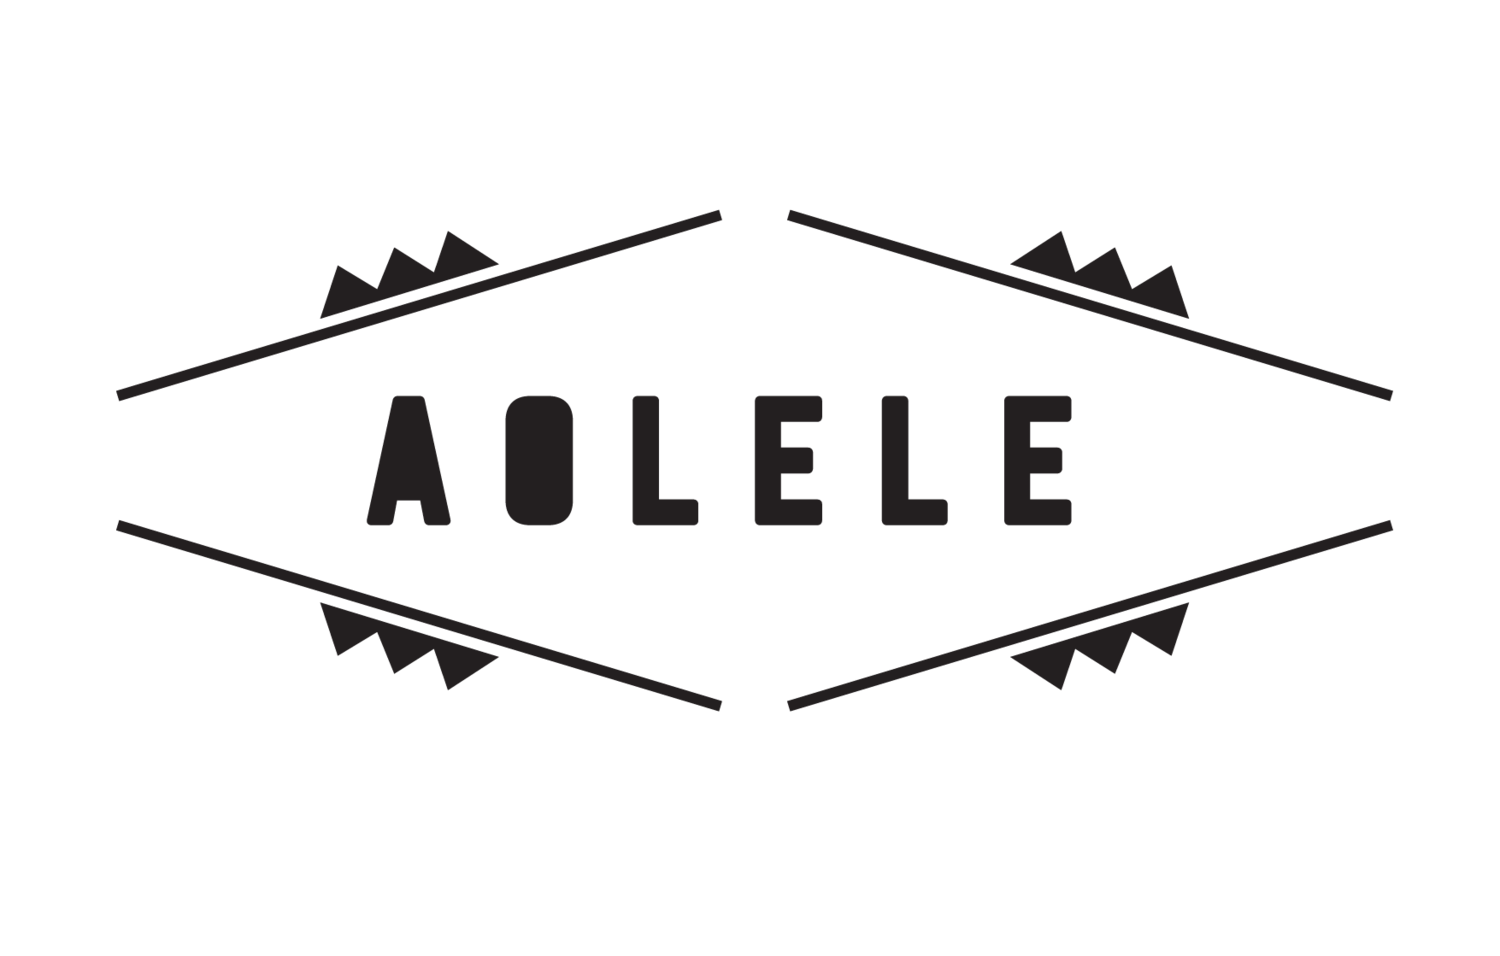 Aolele